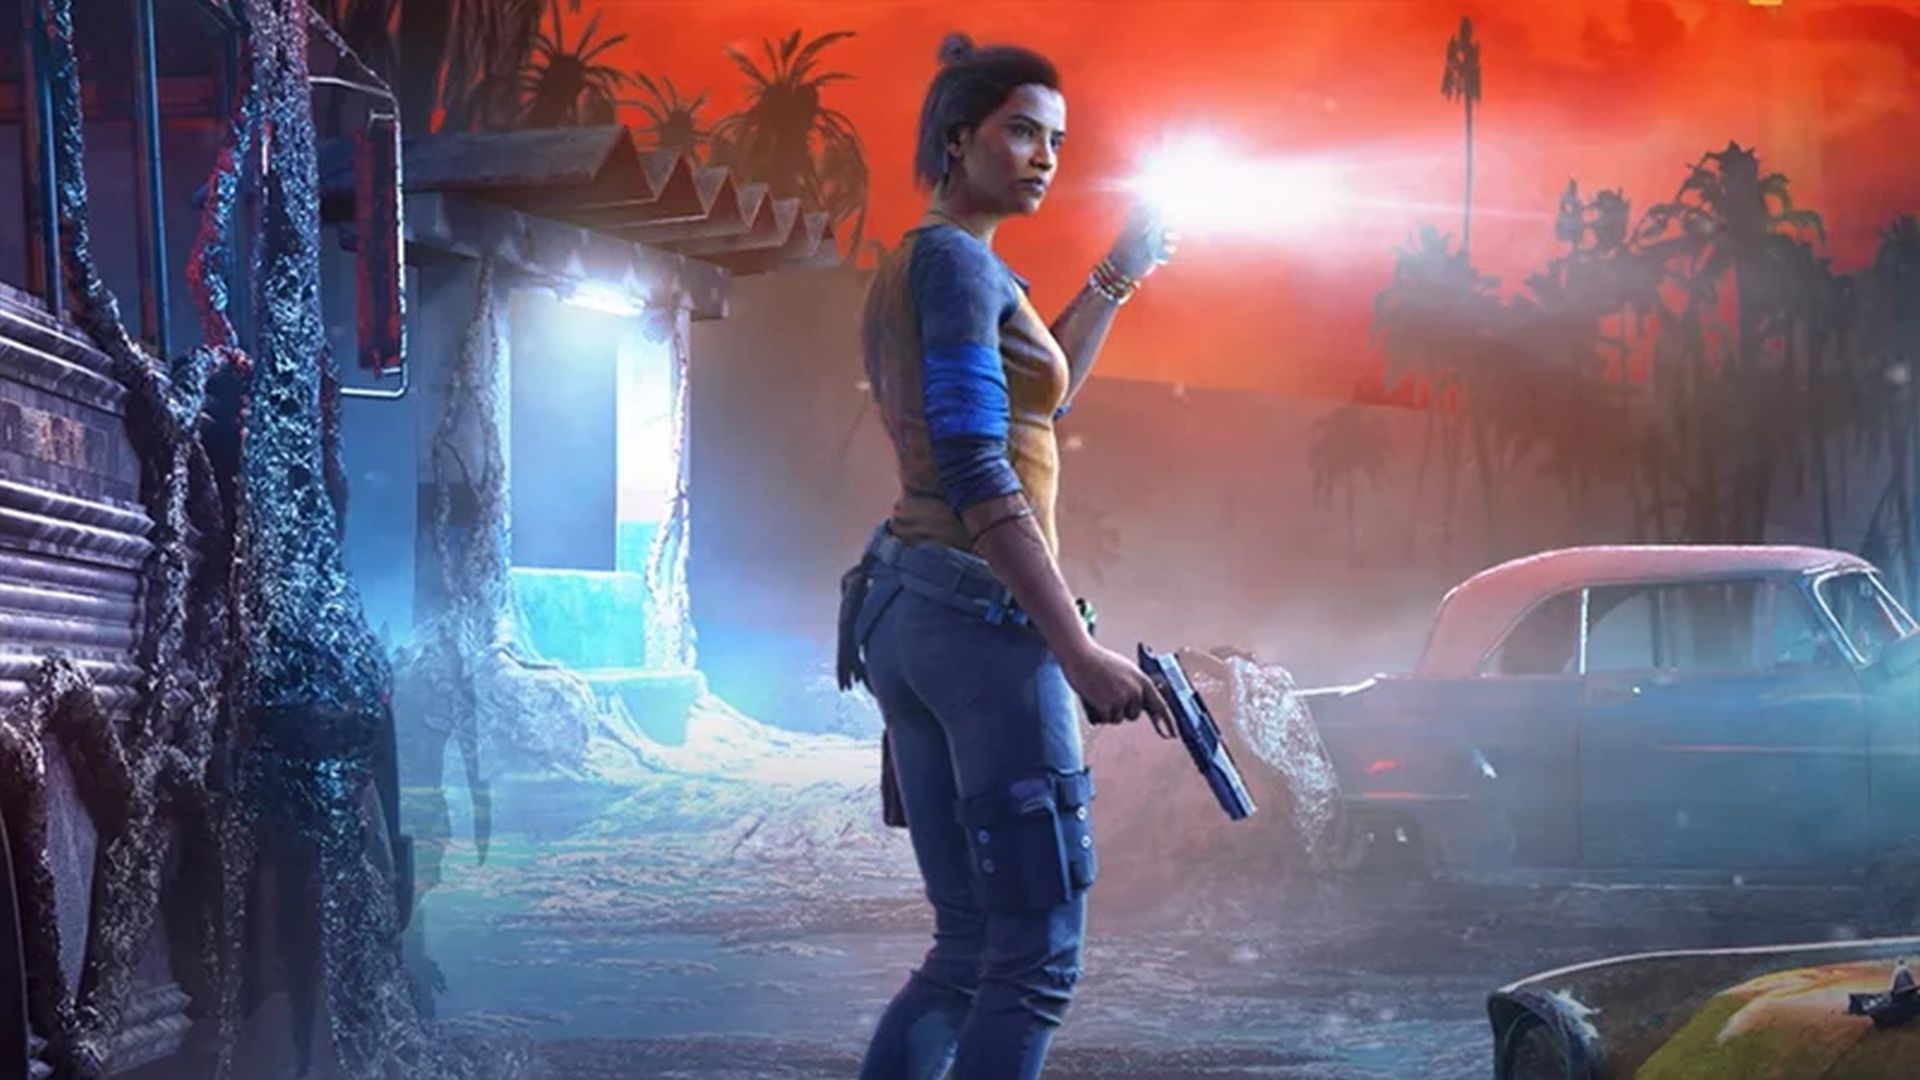 Podemos jugar Far Cry 6 totalmente gratis durante el fin de semana de agosto 2022